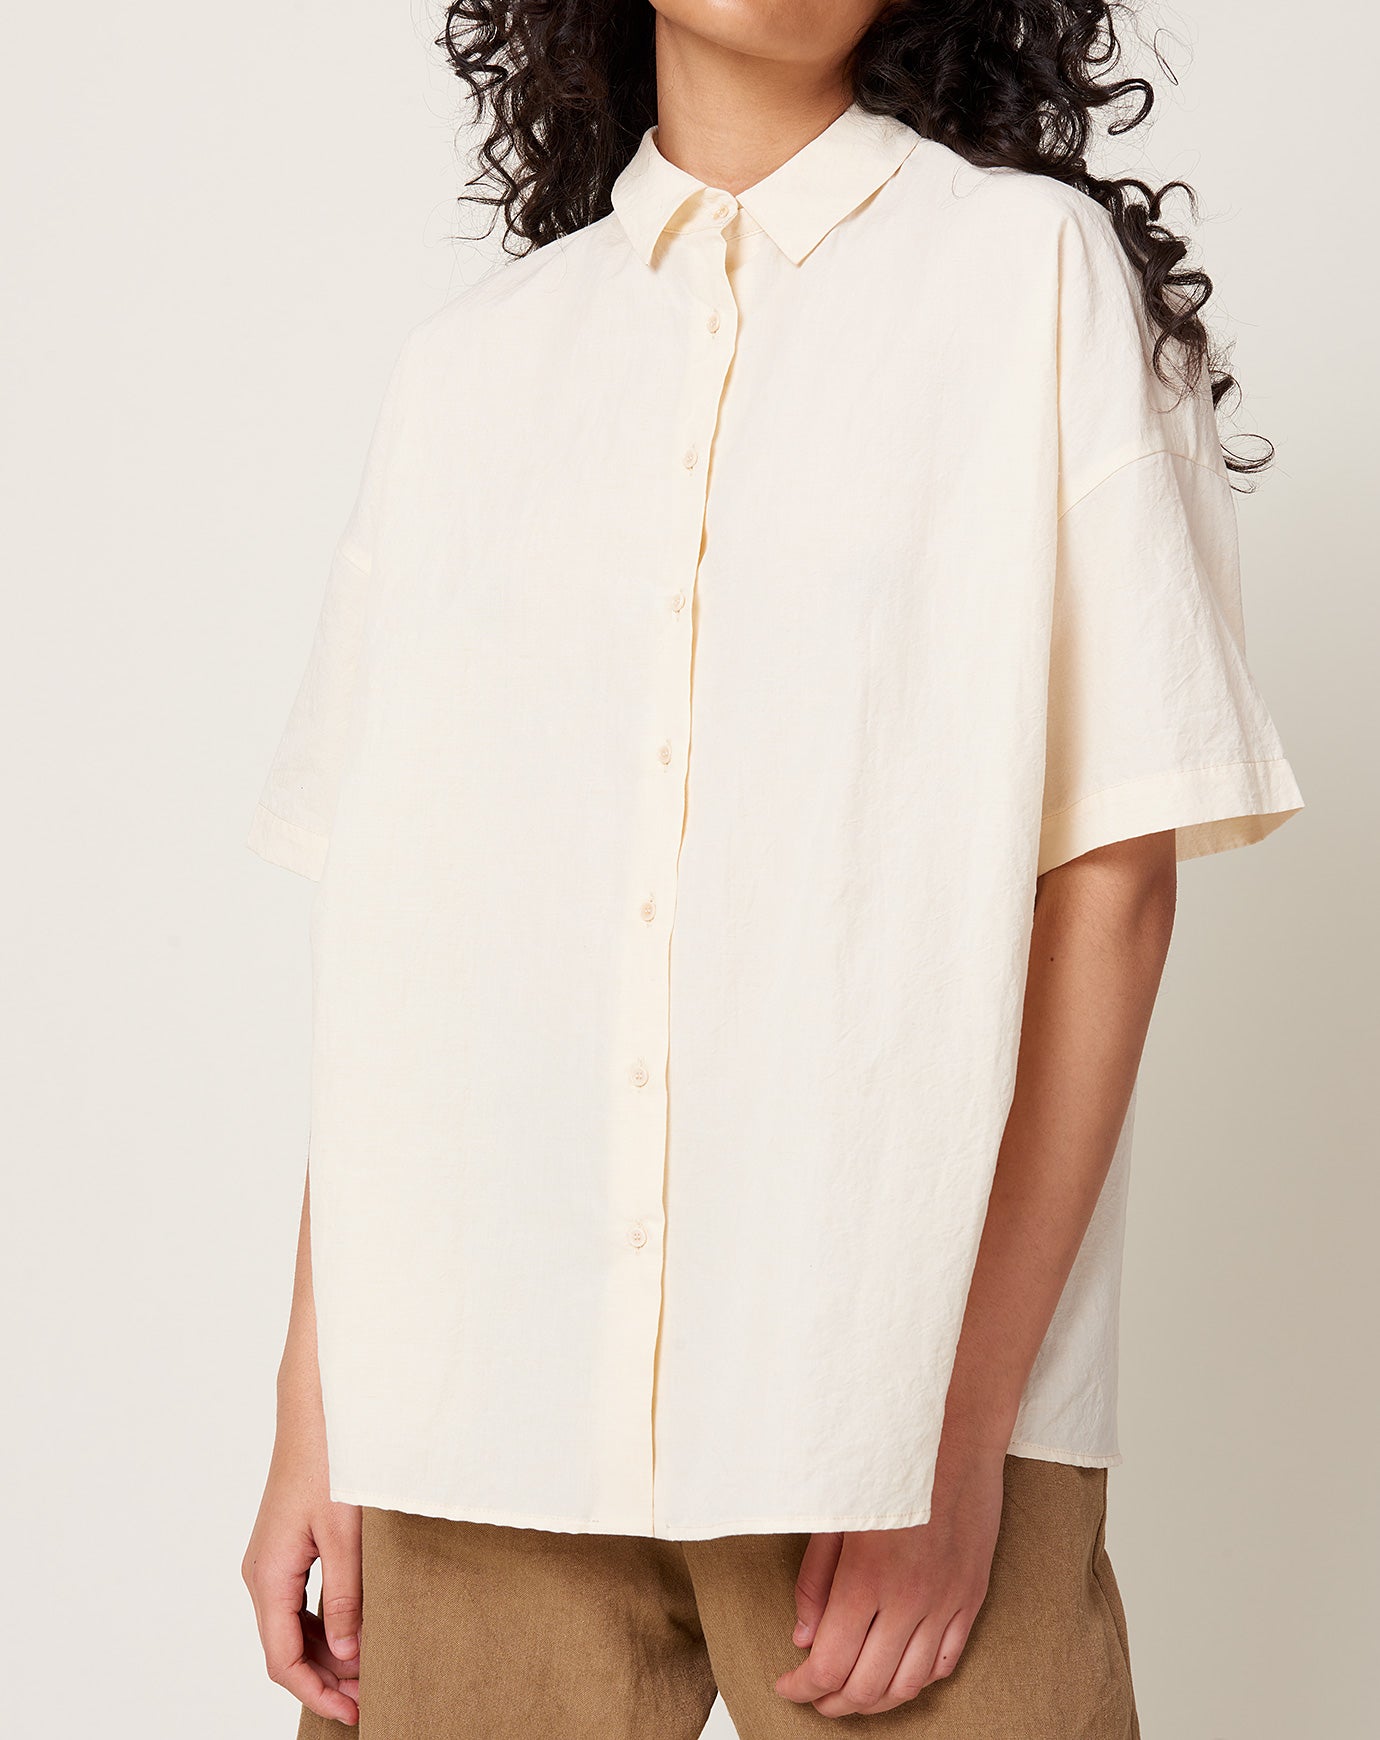 apuntob Cotton Linen Shirt in Natural